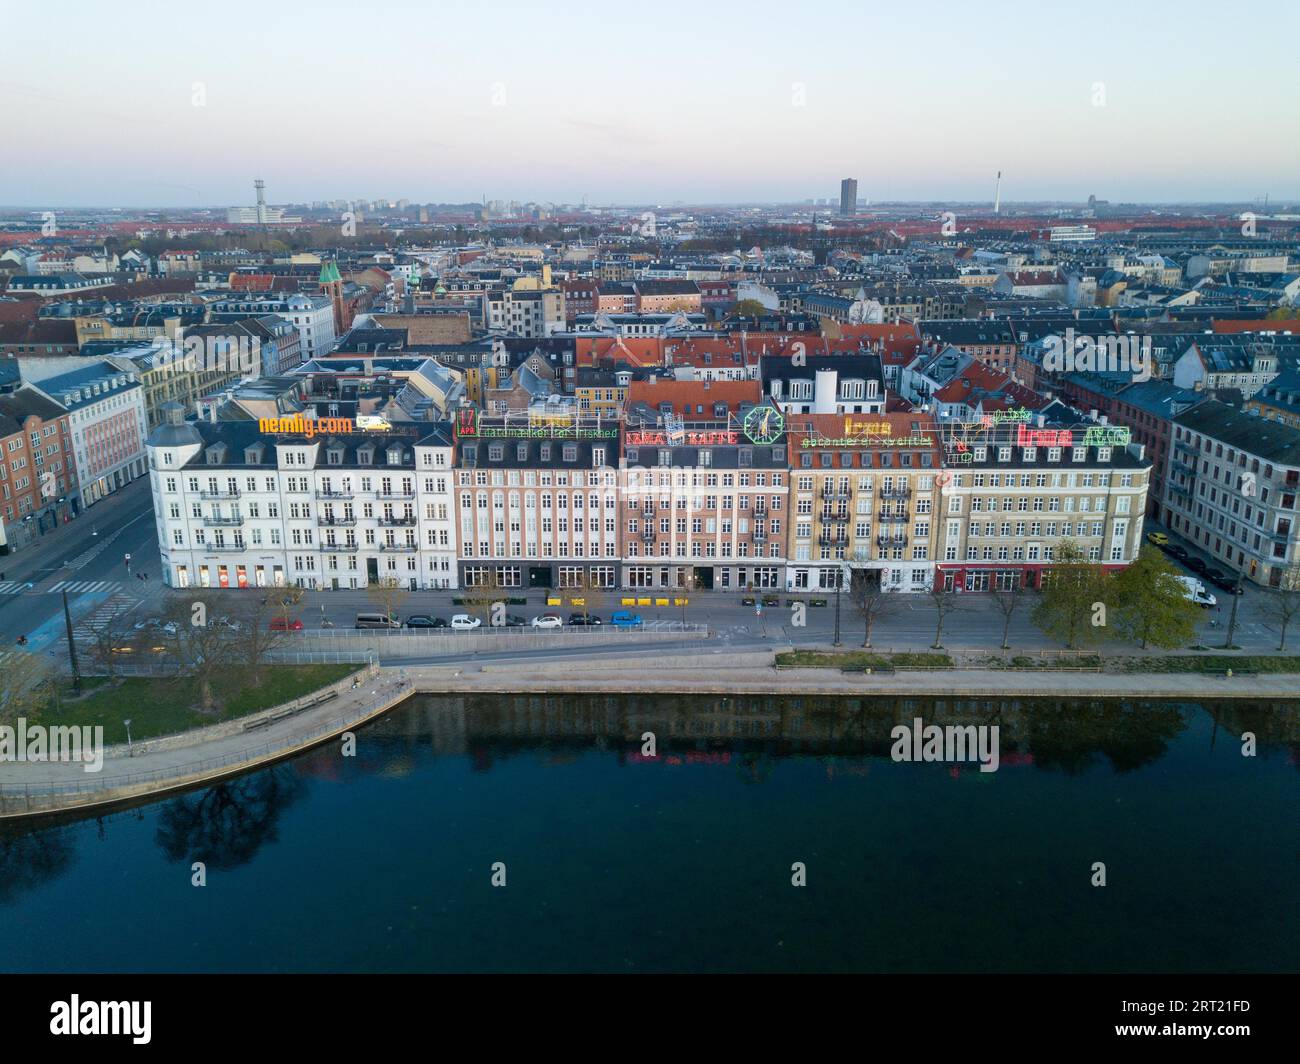 Copenhagen, Denmark, April 17, 2020: Aerial drone view of neon light advertisement billboards on buildings at night Stock Photo